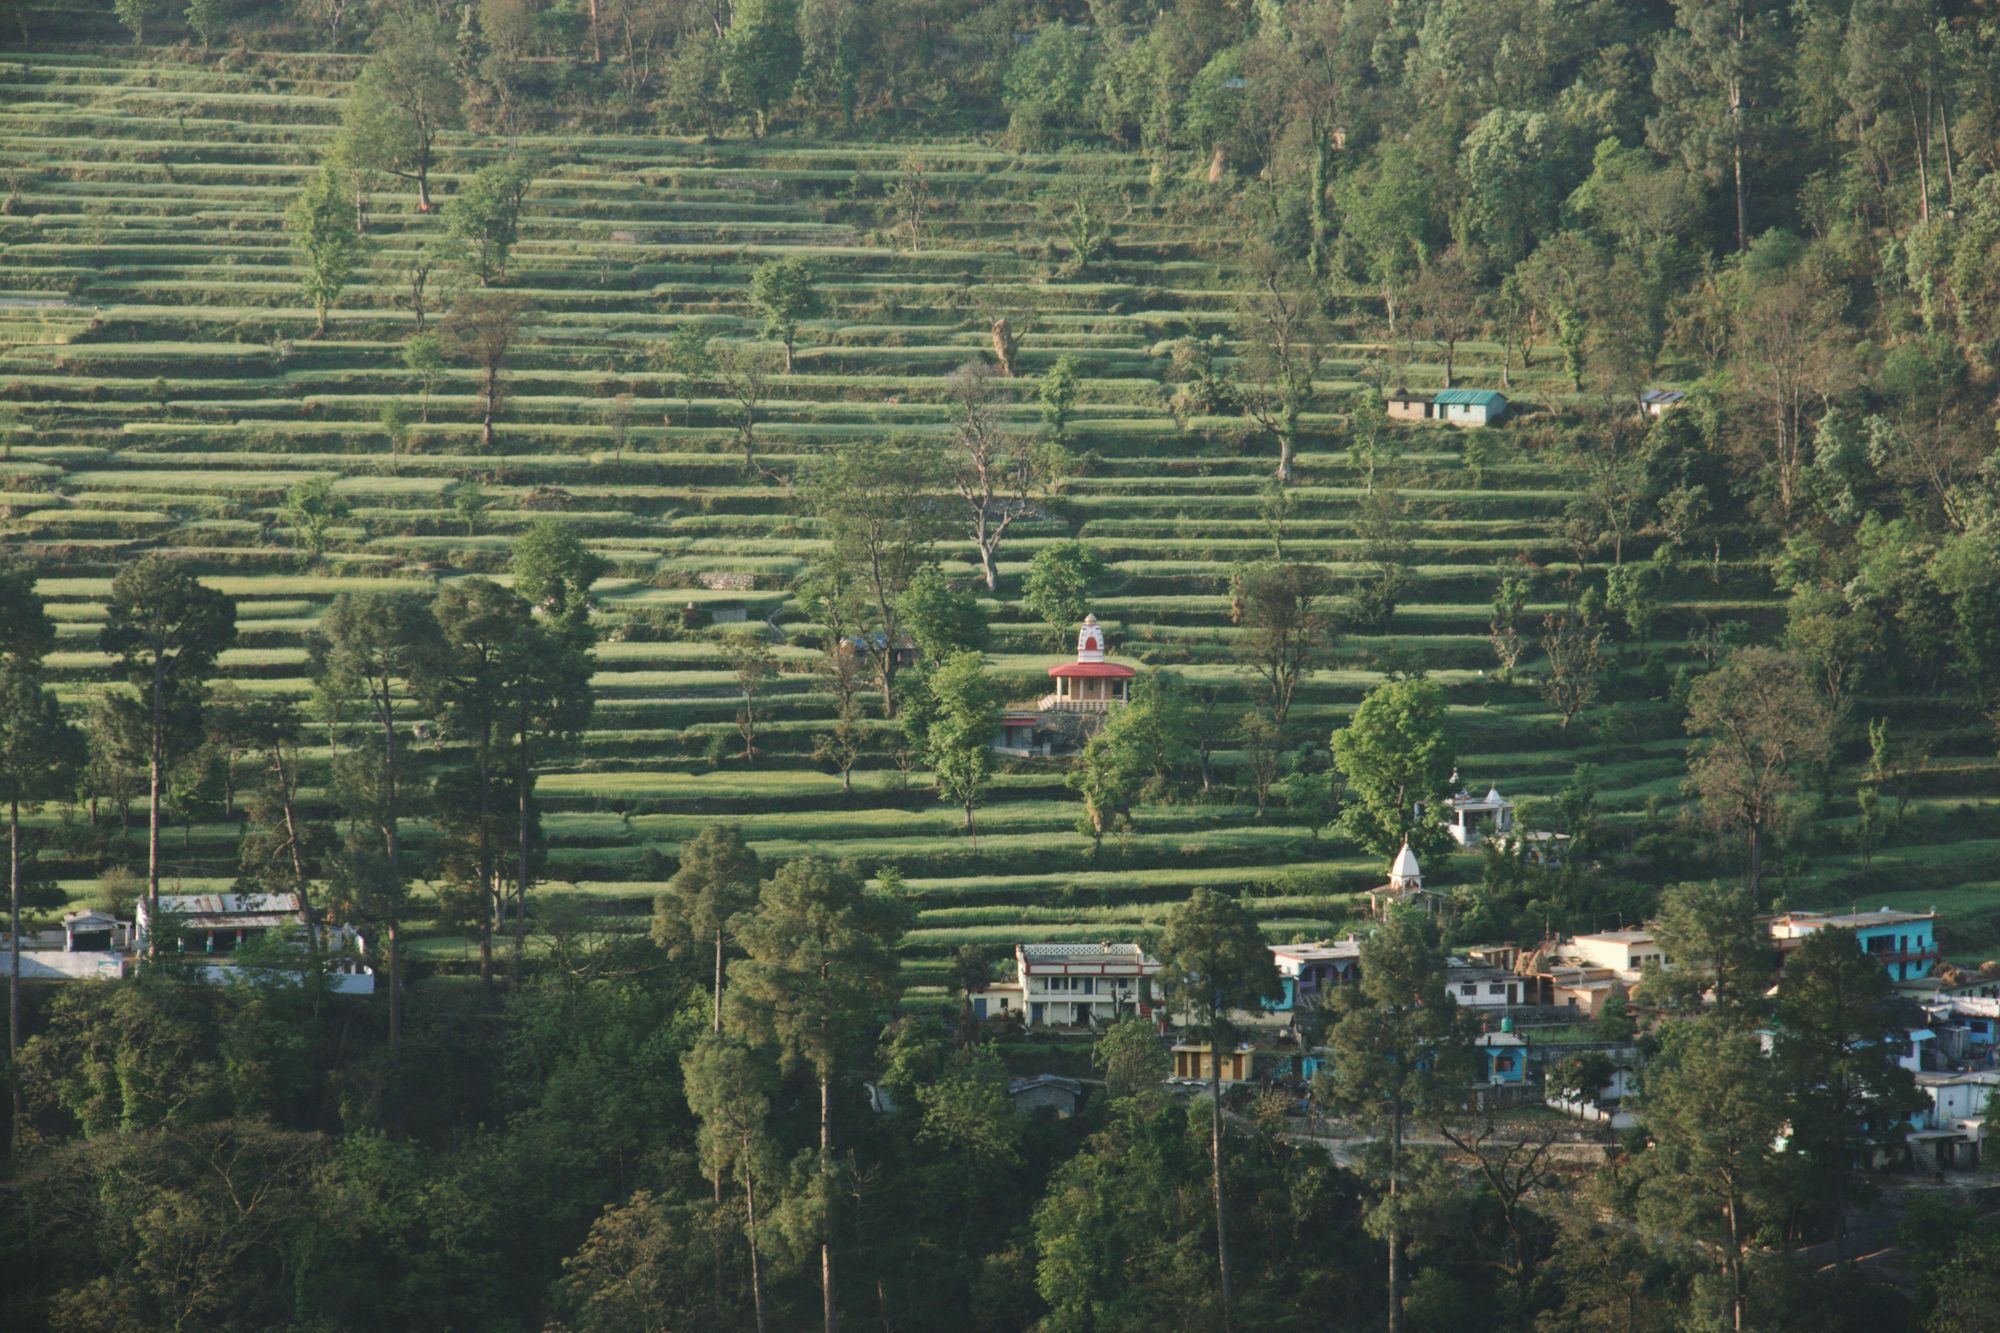 hillside of terraces